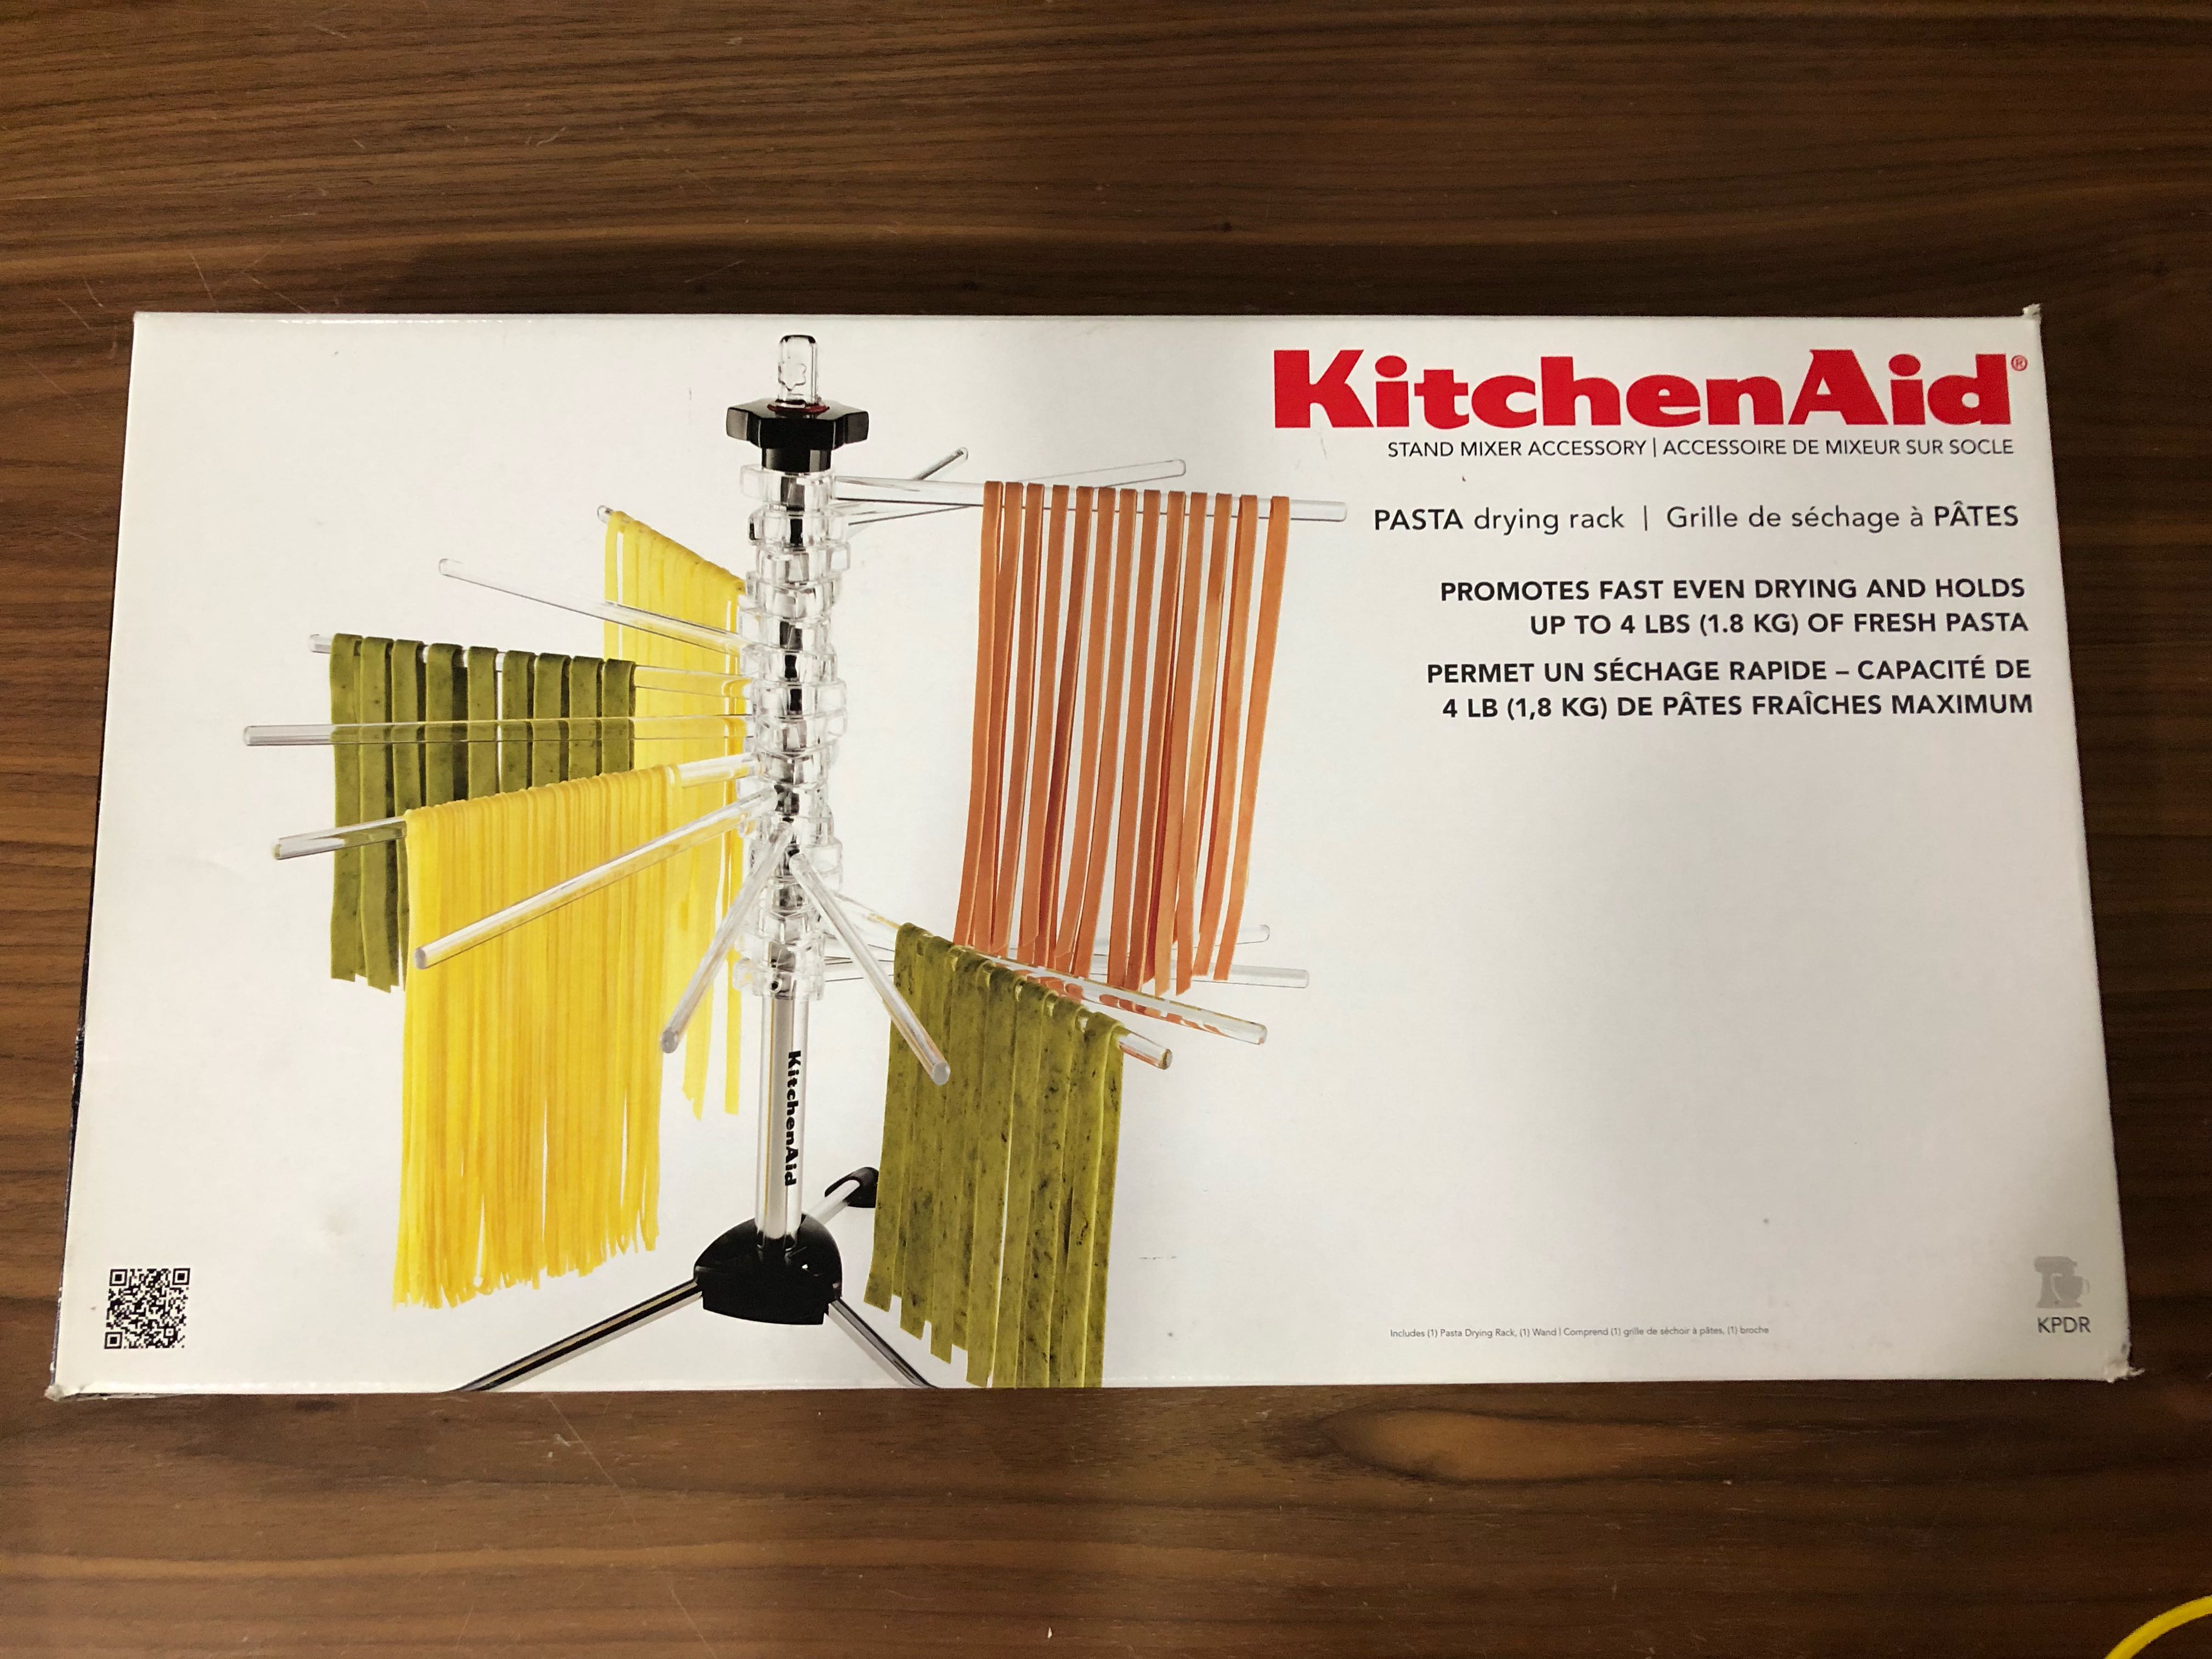 https://media.karousell.com/media/photos/products/2019/06/30/bnib_kitchenaid_pasta_drying_rack_1561877339_7eb3d004.jpg